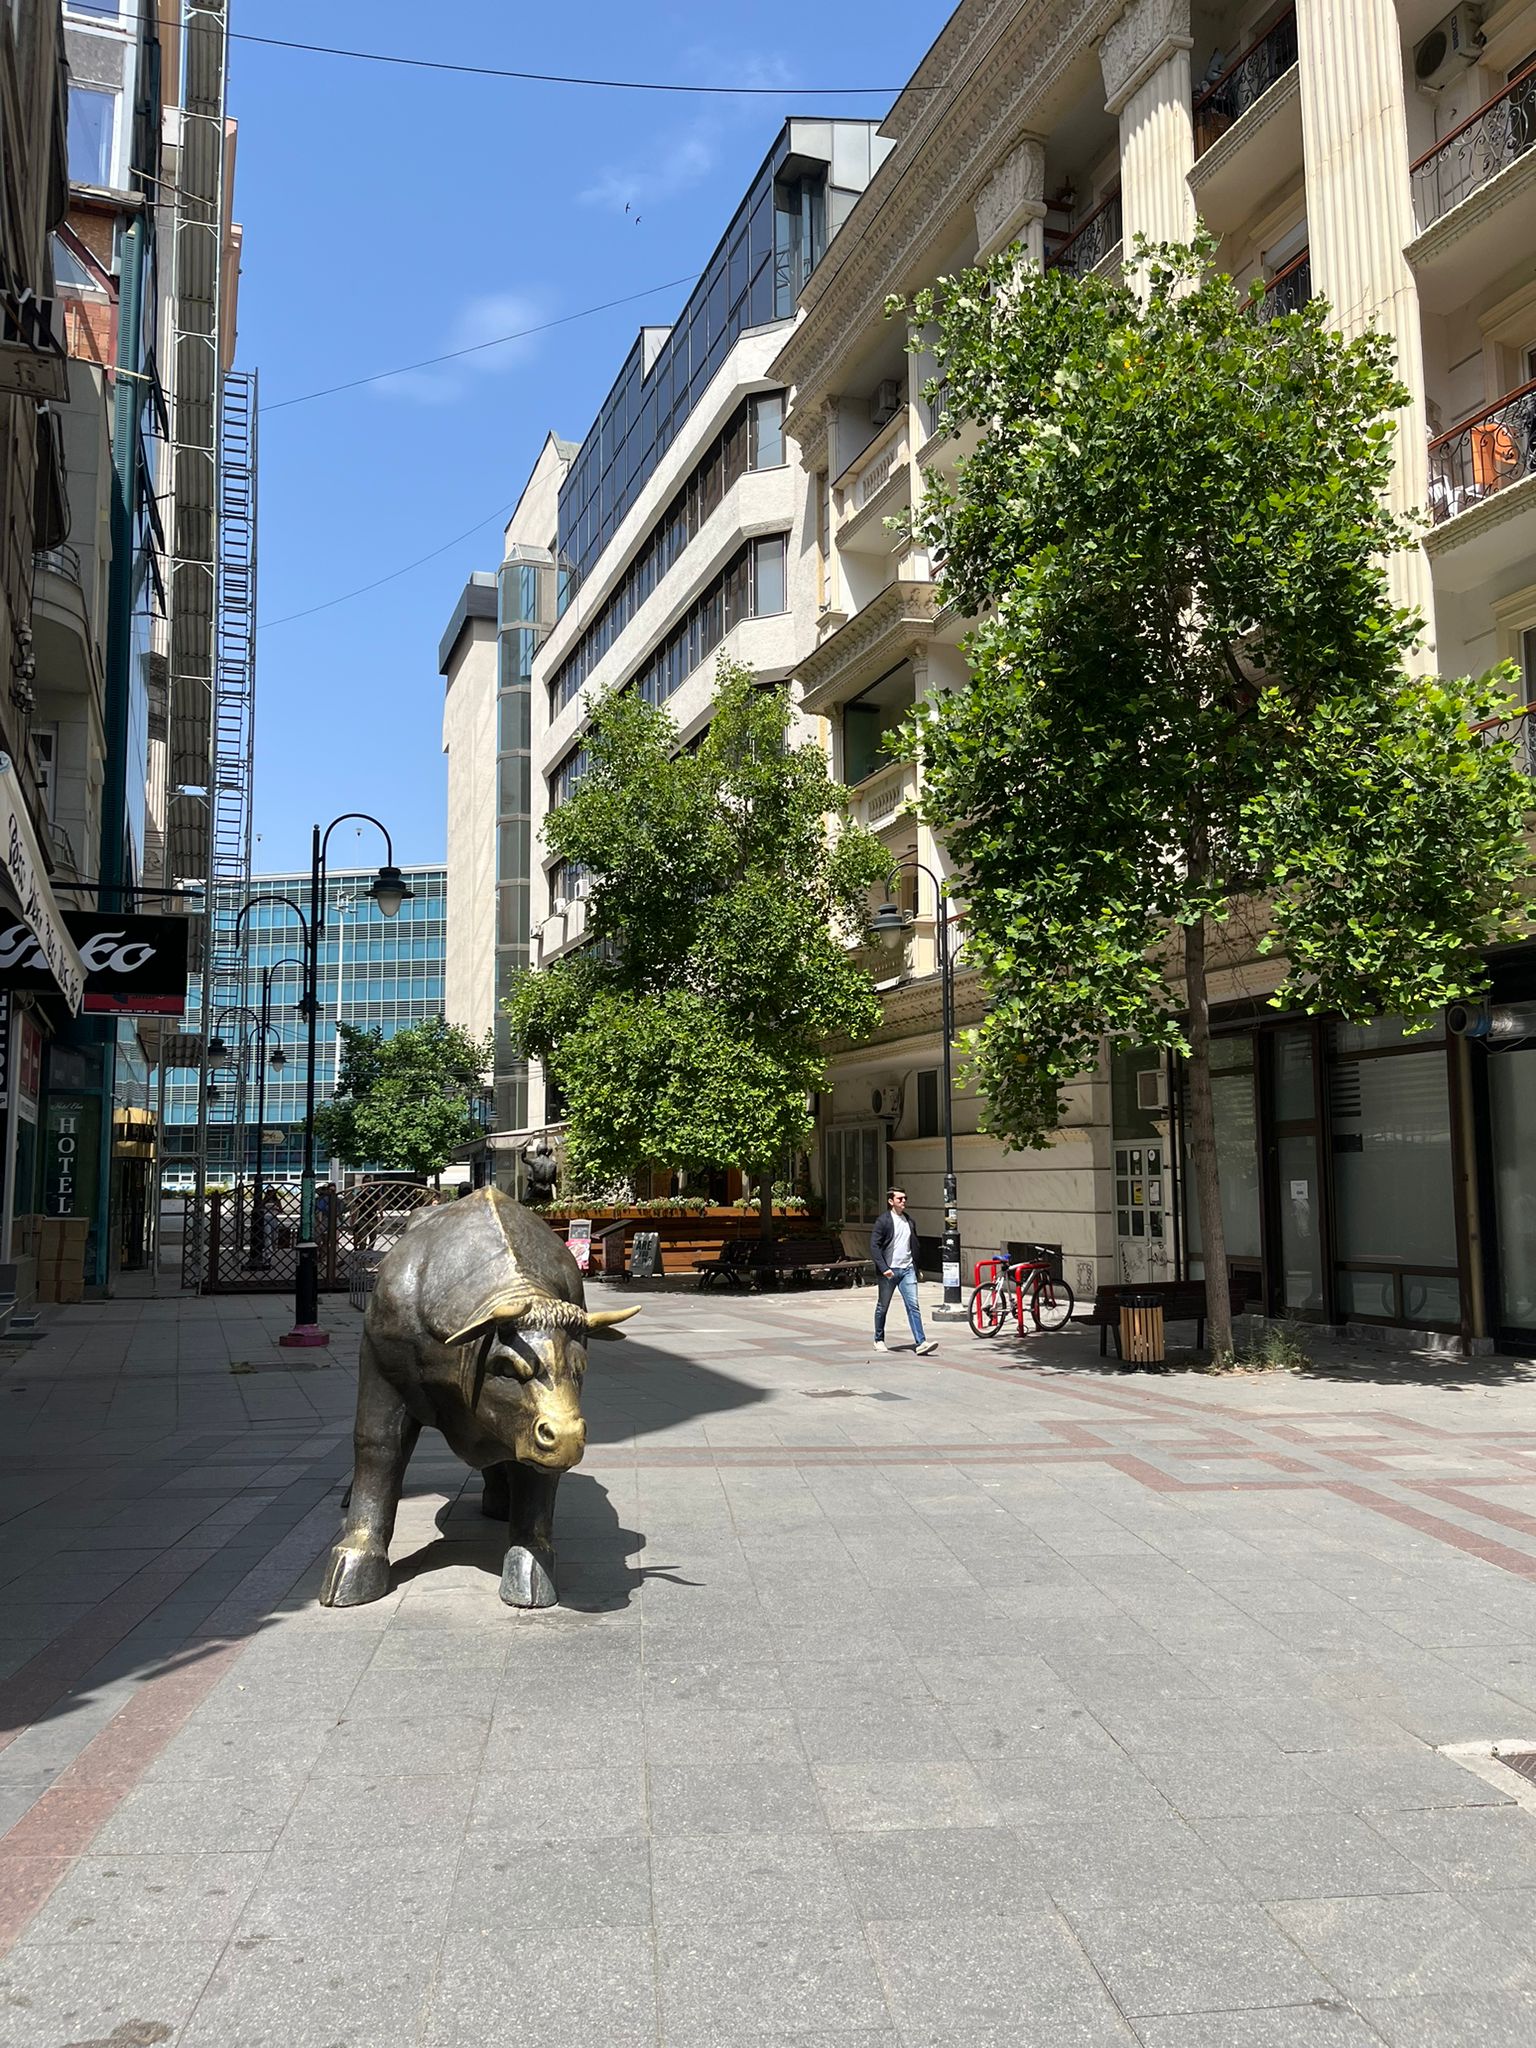 Socha býka na ulici.